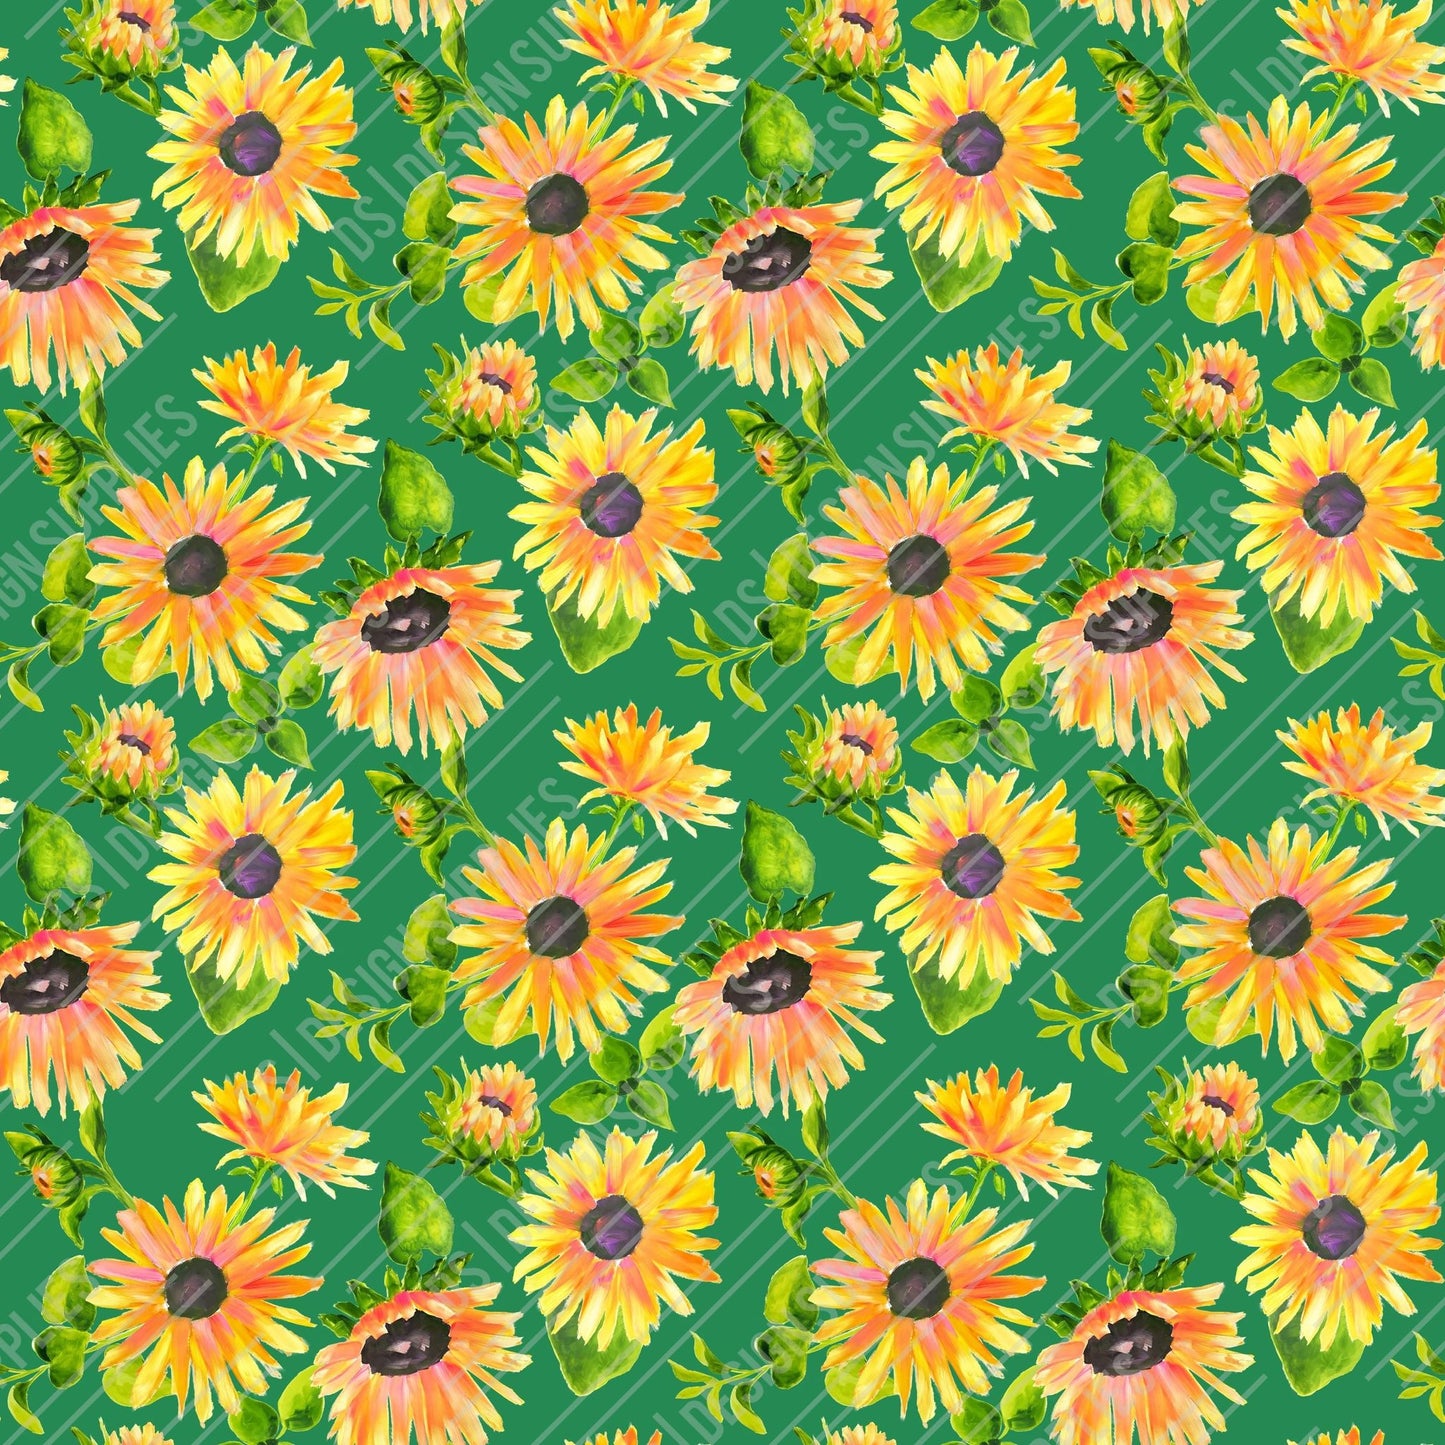 Sunflowers on Green